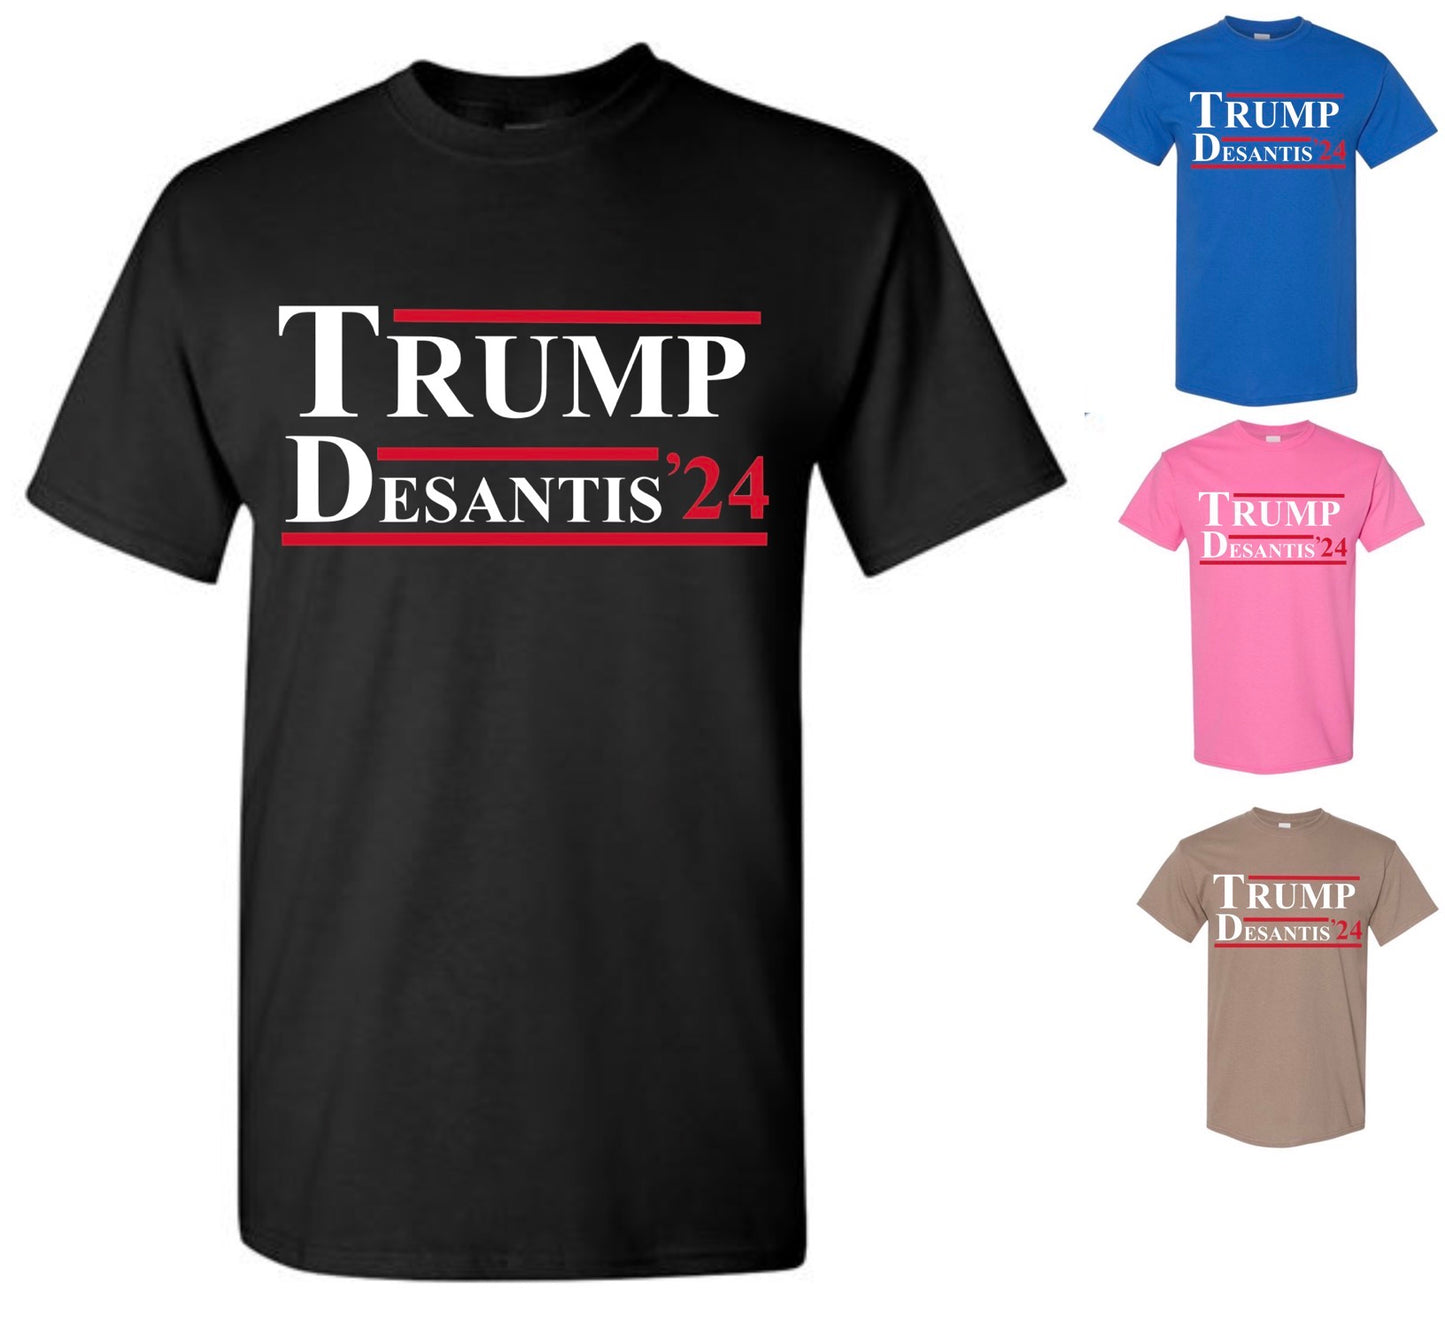 Trump DeSantis 2024 T-Shirt — Just Pay Shipping